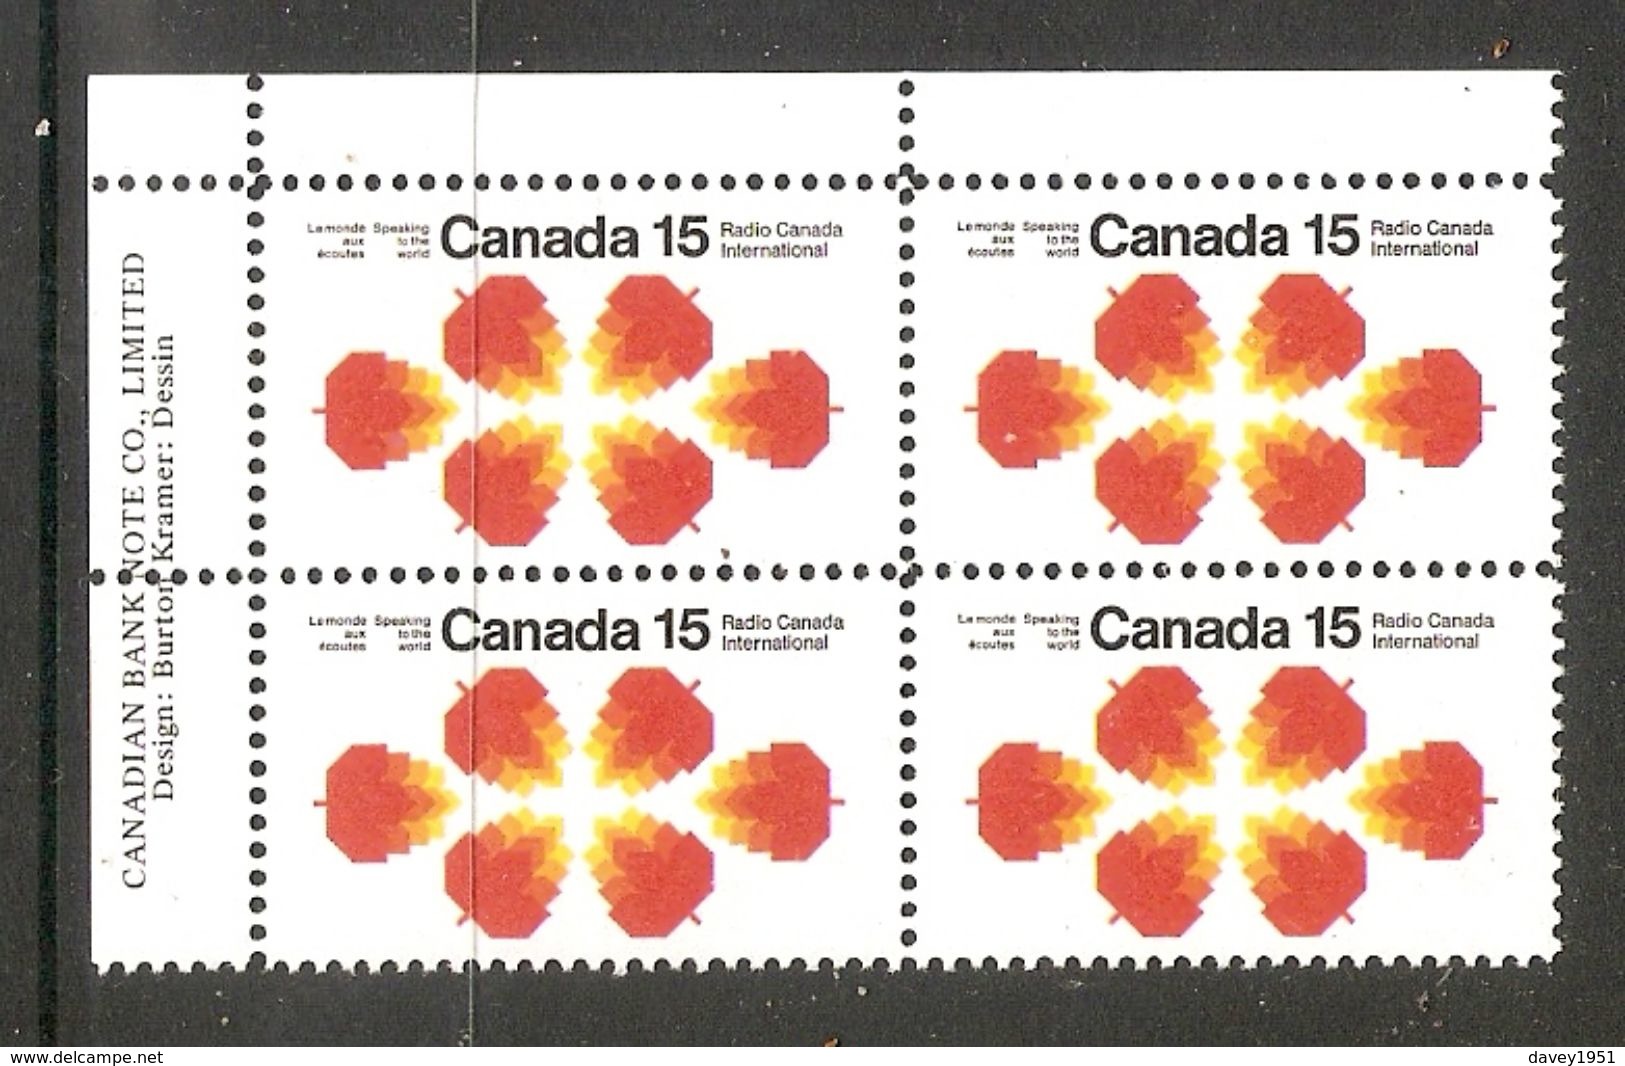 006309 Canada 1971 Radio 15c Plate Block UL MNH - Plate Number & Inscriptions